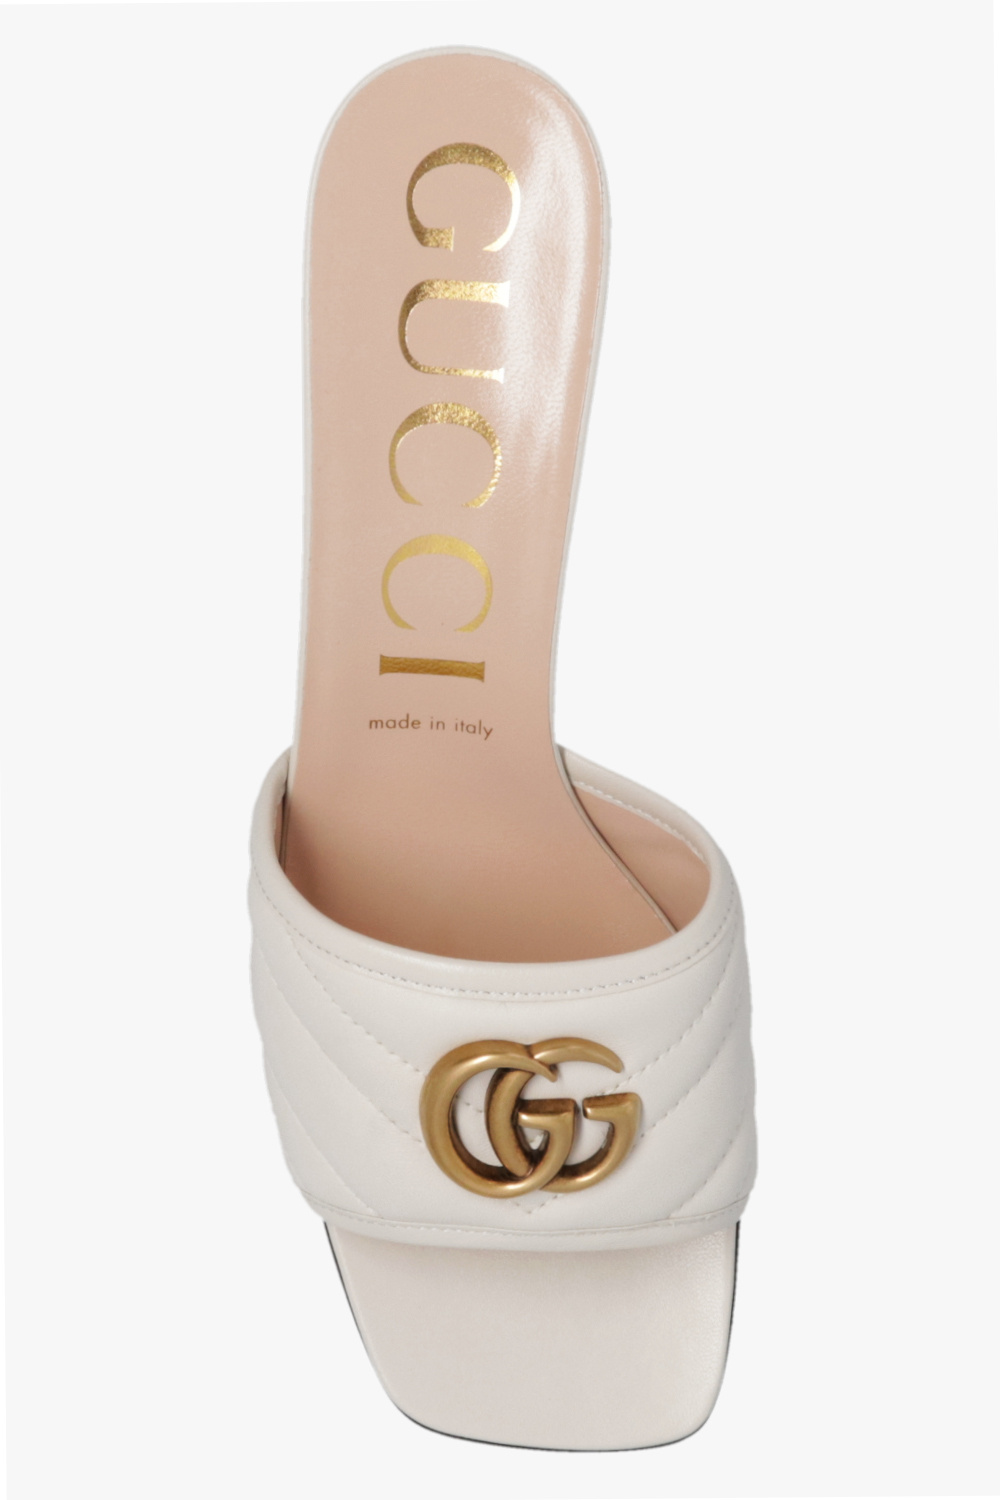 Gucci gucci gg logo heart earrings item